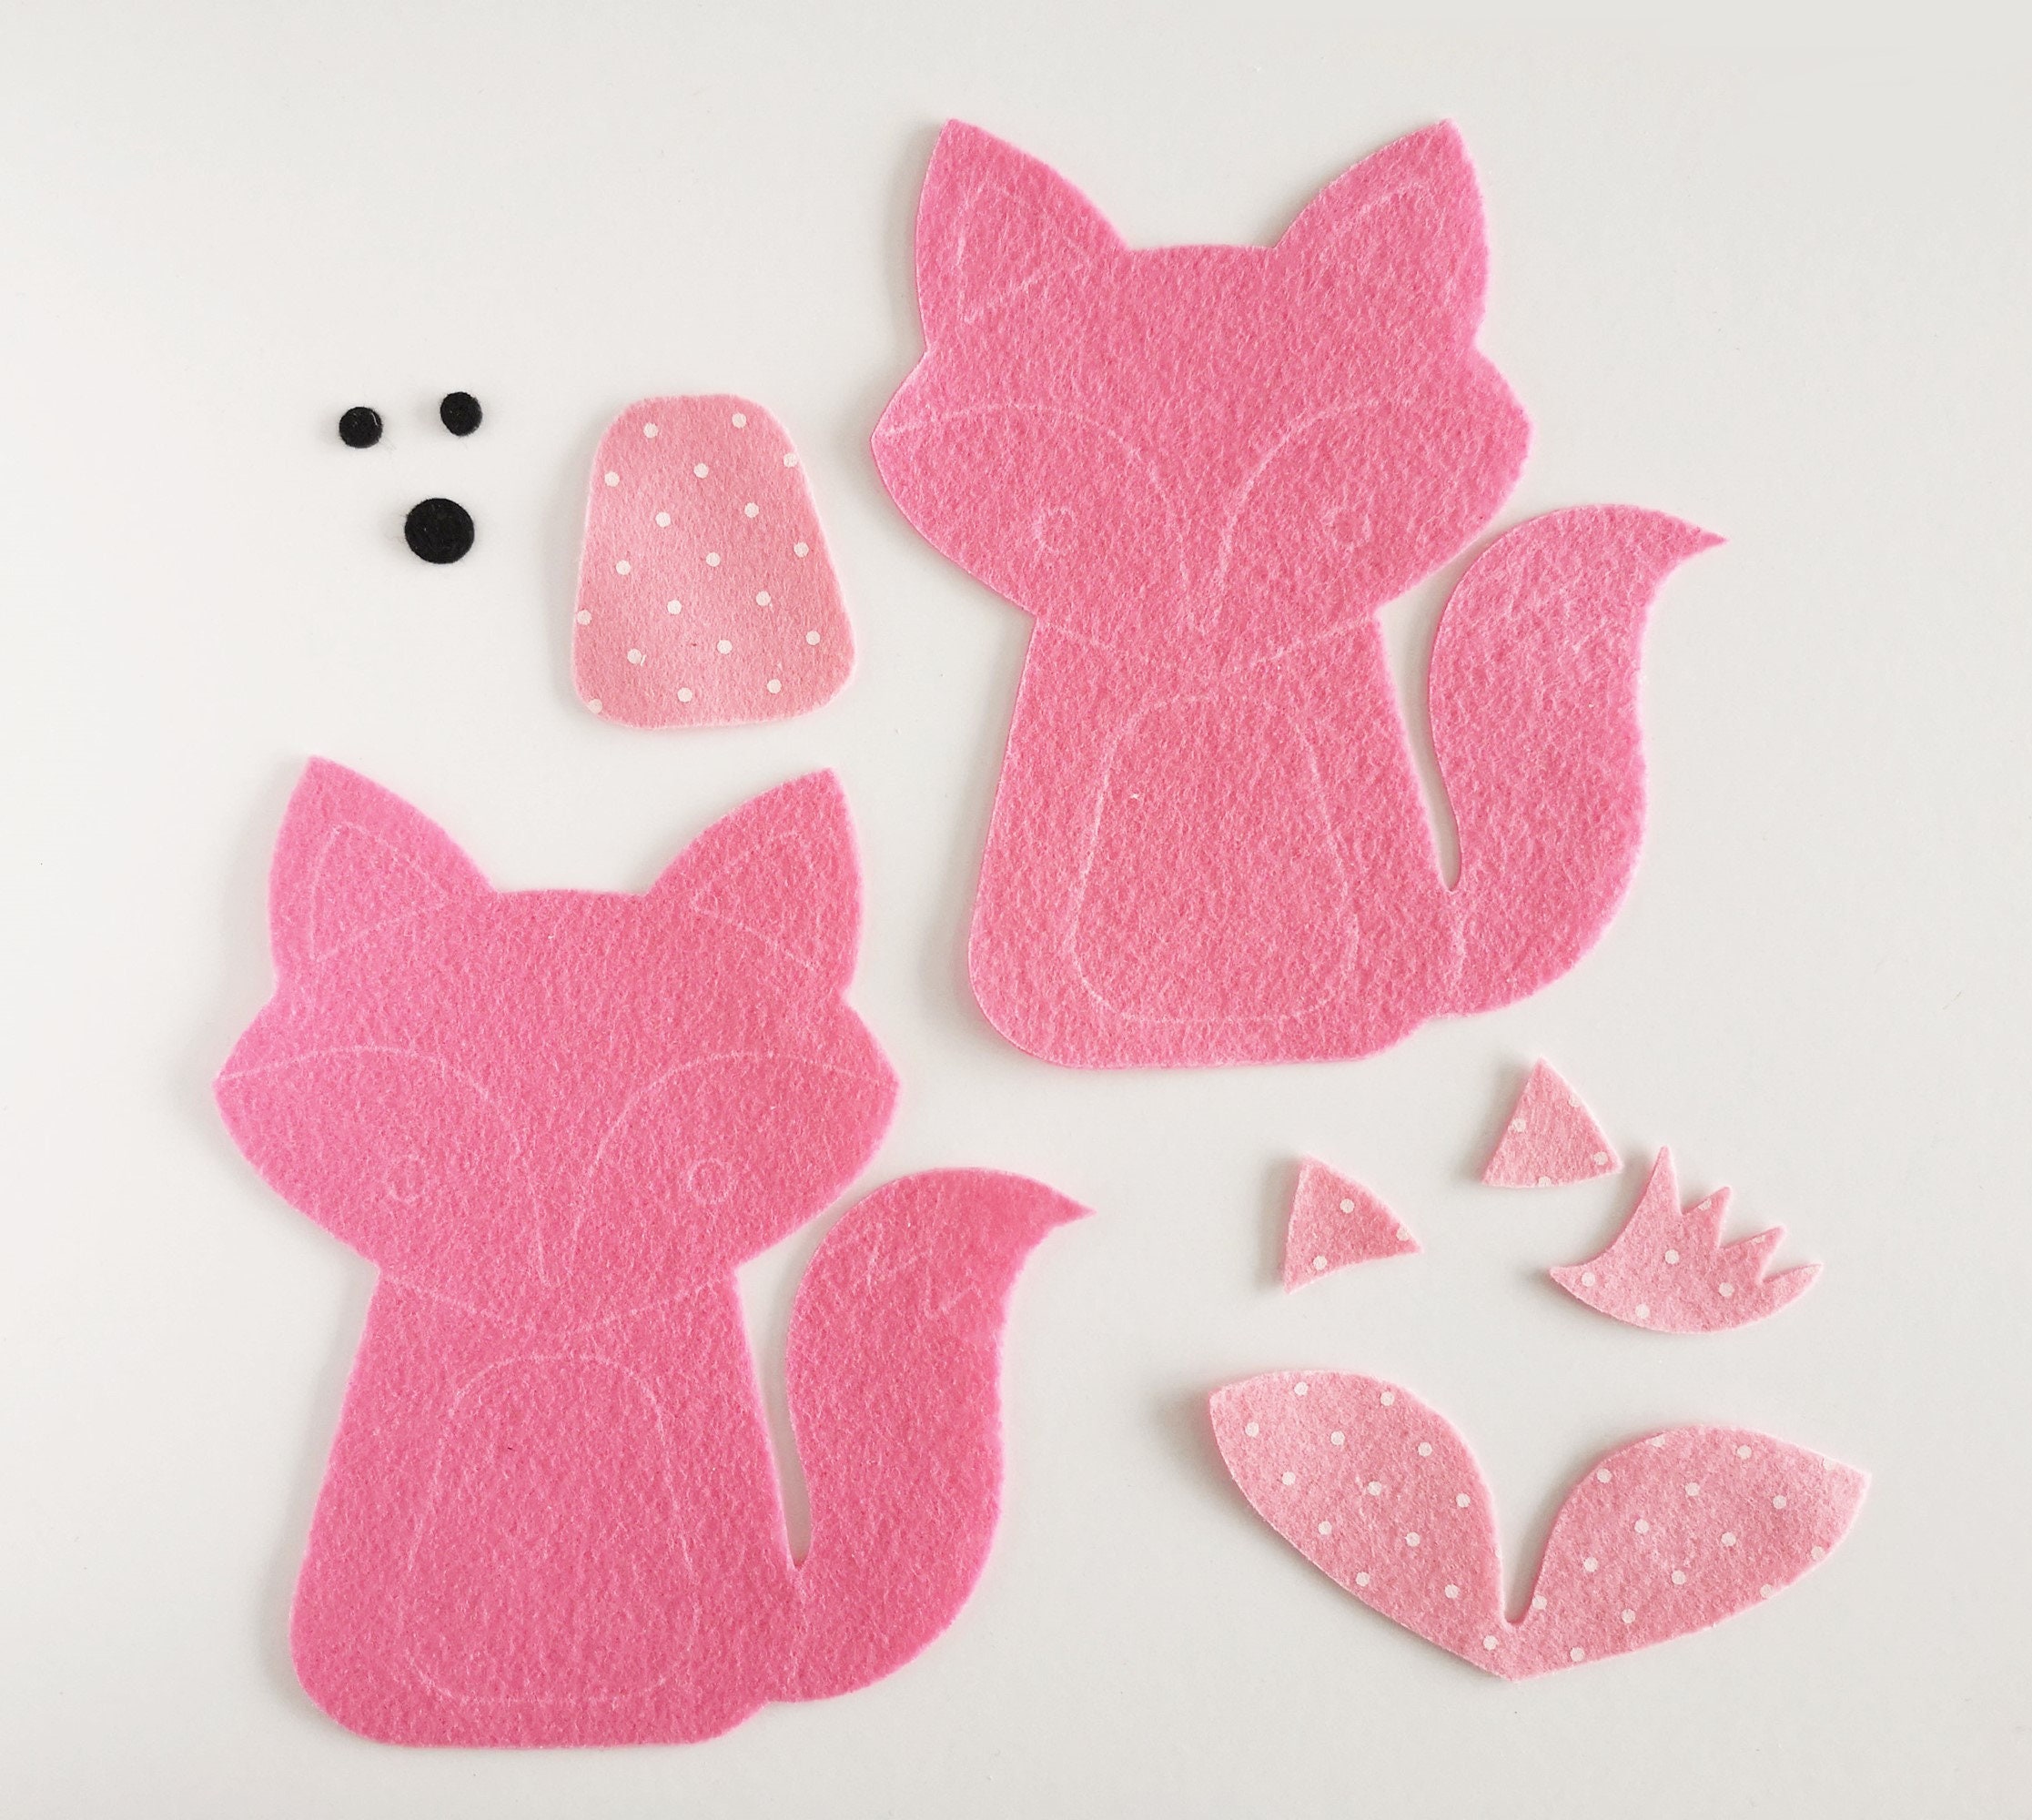 qollorette Felt Sewing Kit for Children, Make Your Own Fox Toy